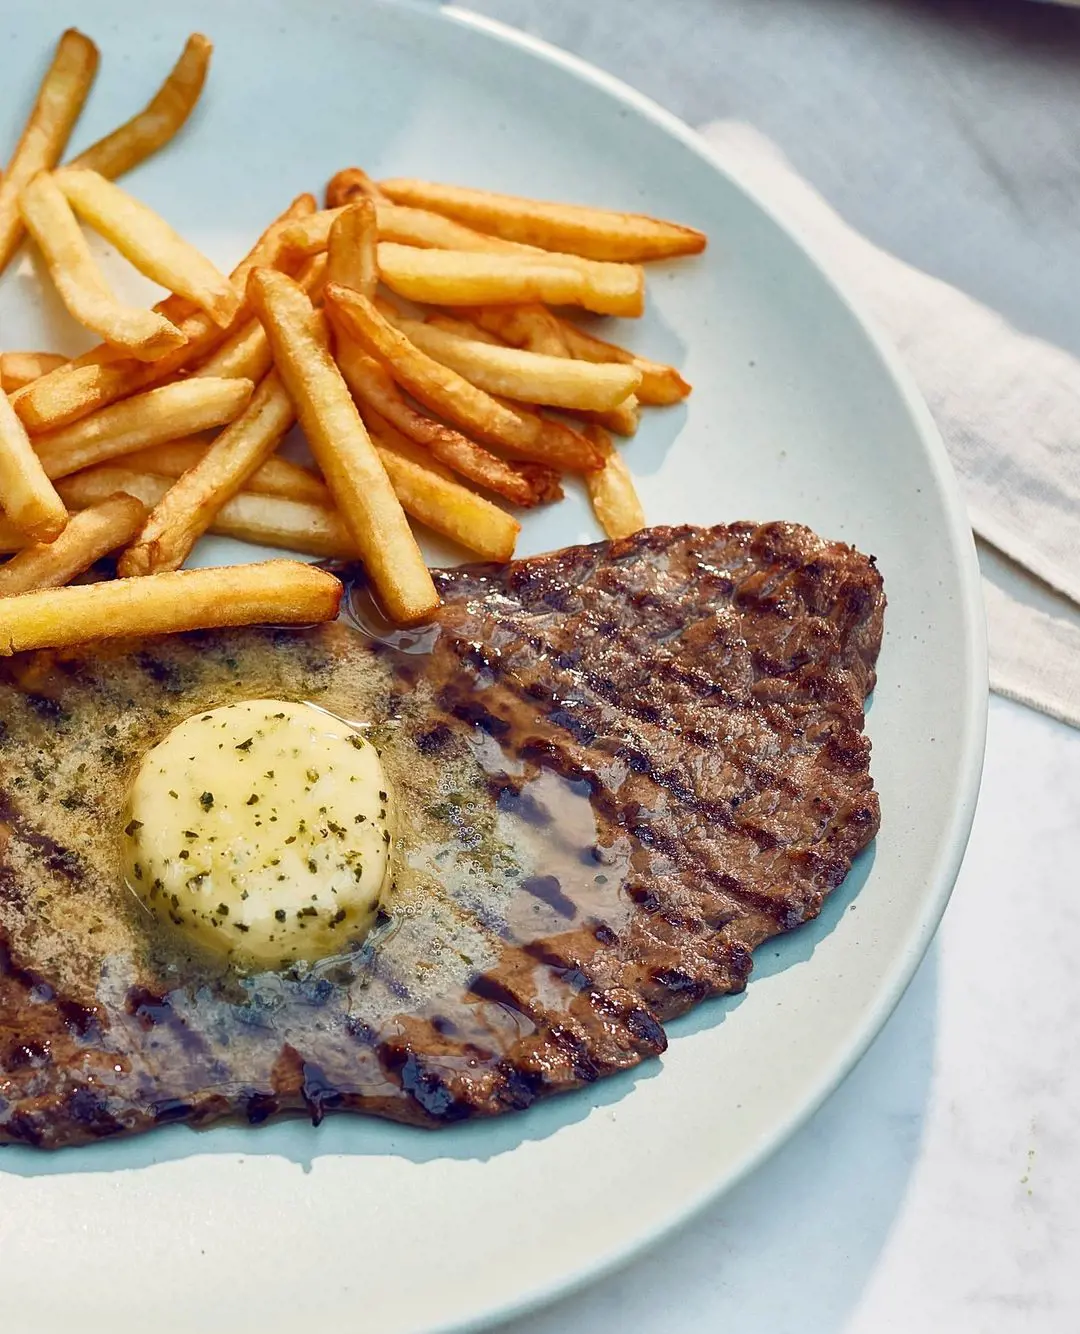 rib-eye steak, 22 oz of our tender, succulent Côte de Boeuf steak